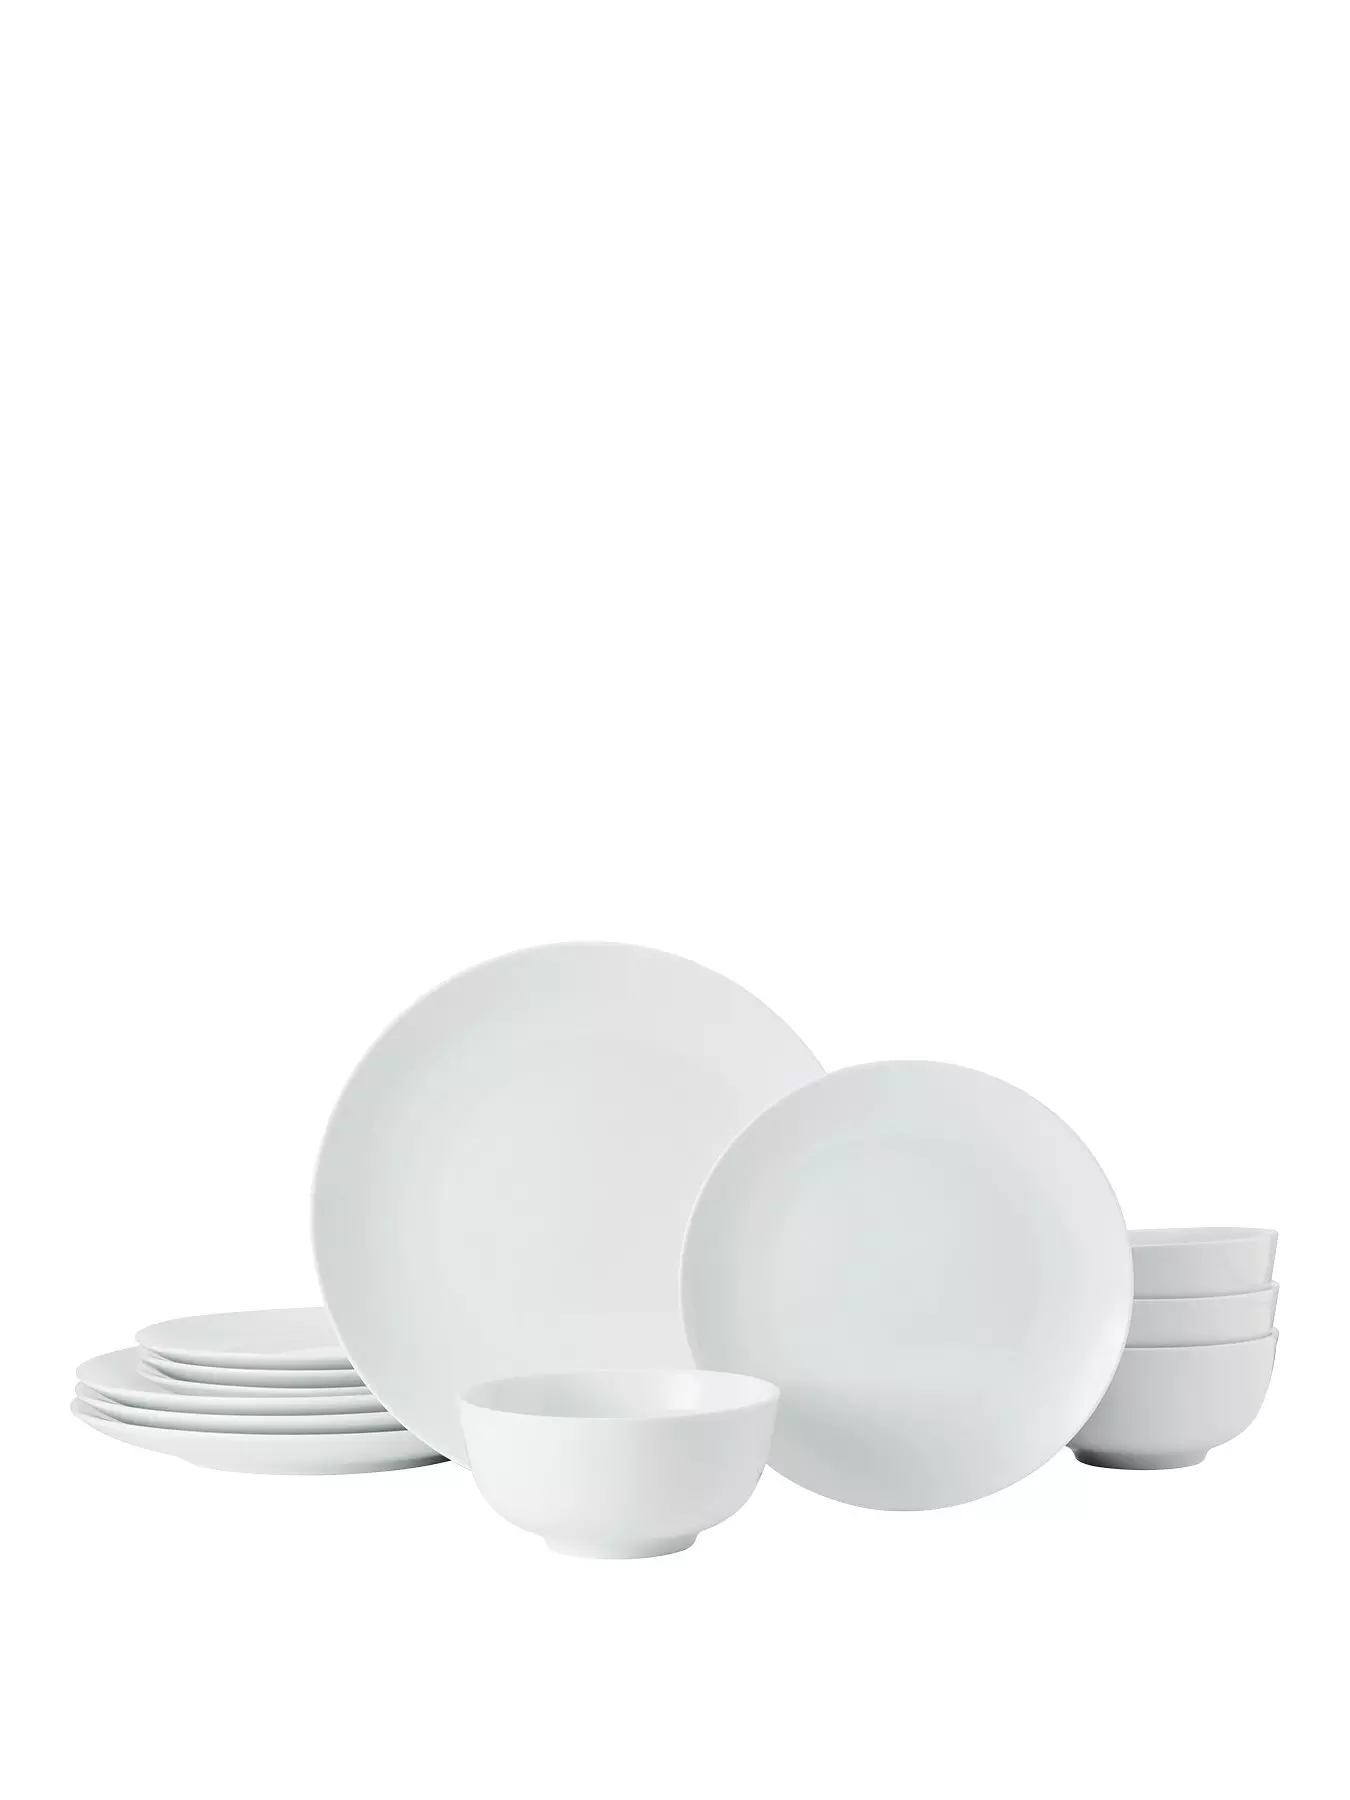 Cute Sauce Dish Set - 4 Pcs - Ceramic - 4 Styles Available - ApolloBox